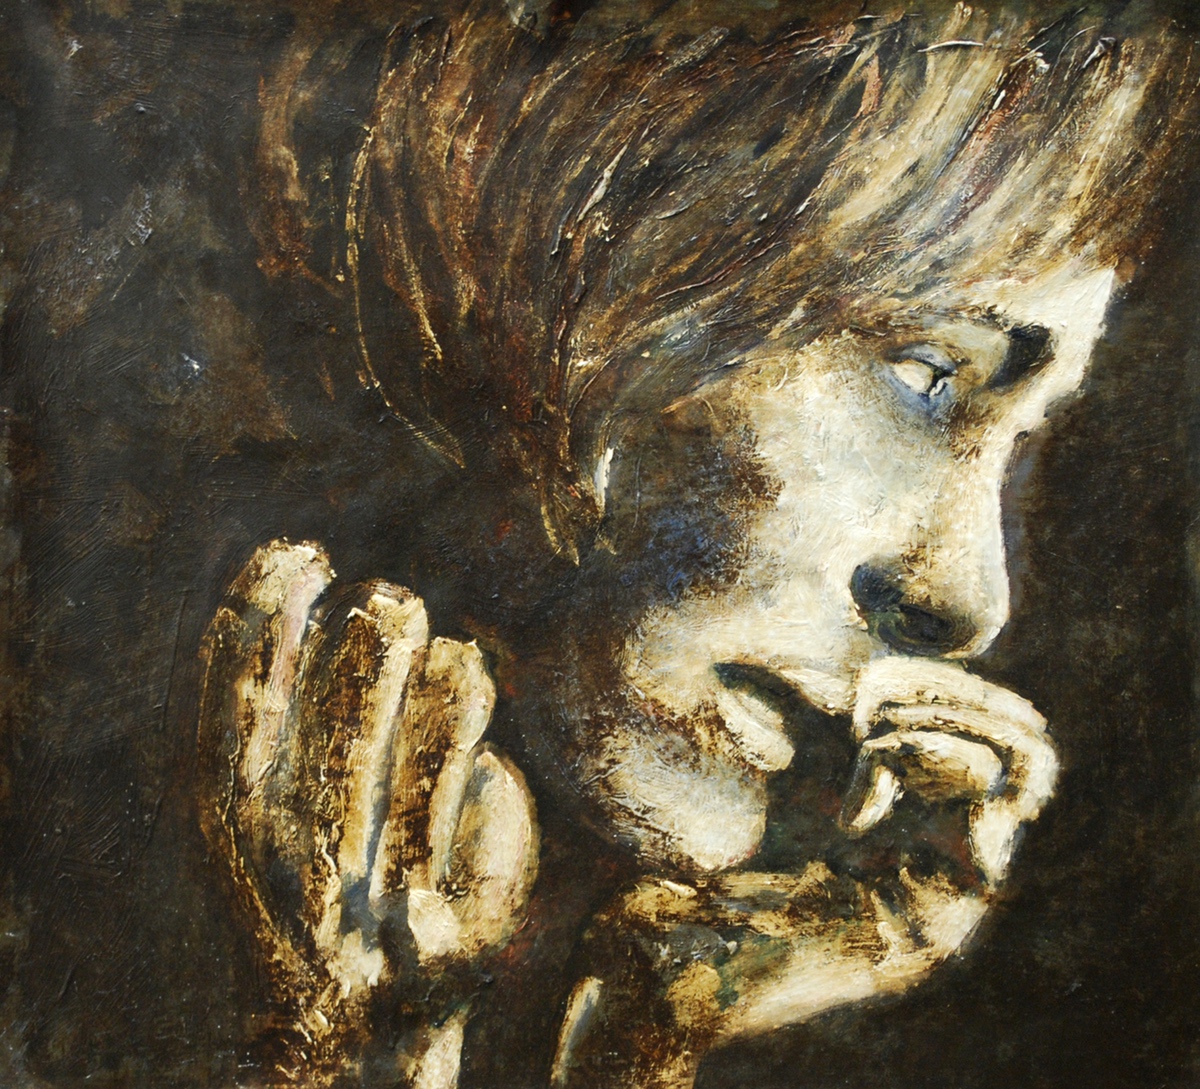 ”Angst”, 2010, 46 x 51 cm. Akryl på lærred. (Carsten Frank nr. 1390)